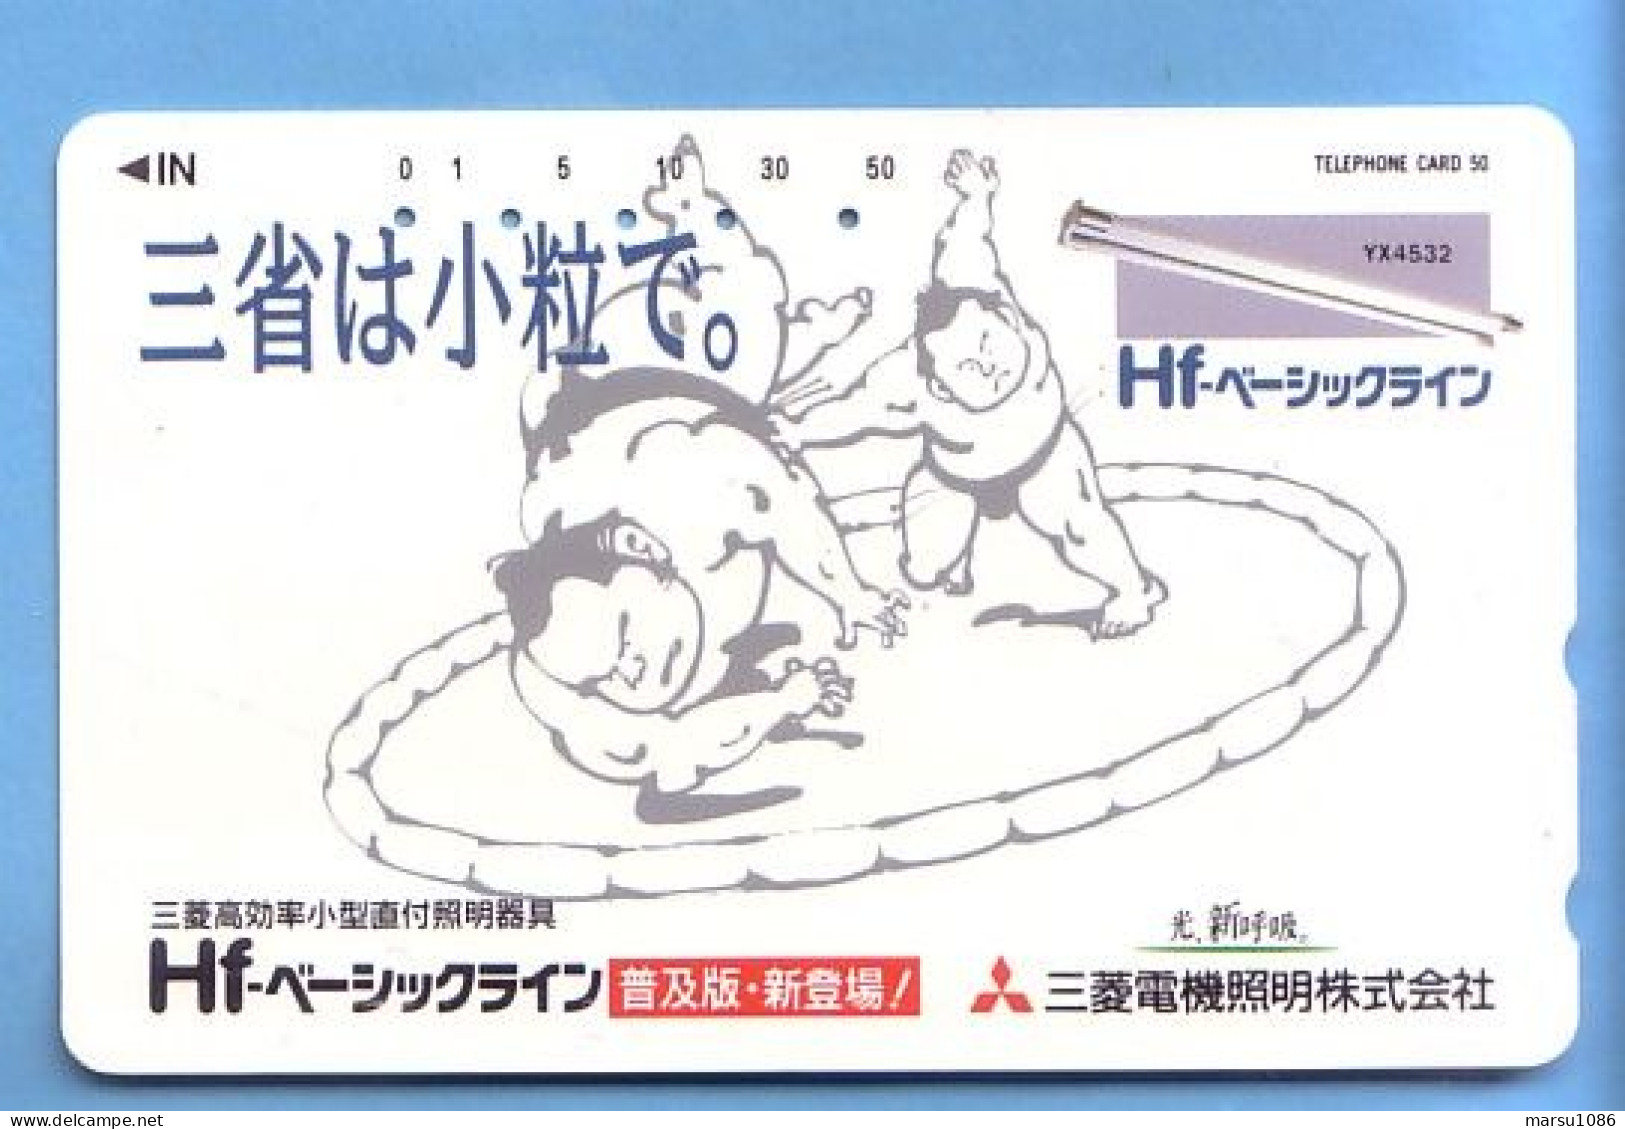 Japan Japon Telefonkarte Télécarte Phonecard Telefoonkaart -  Sport Sumo Ringen - Sport